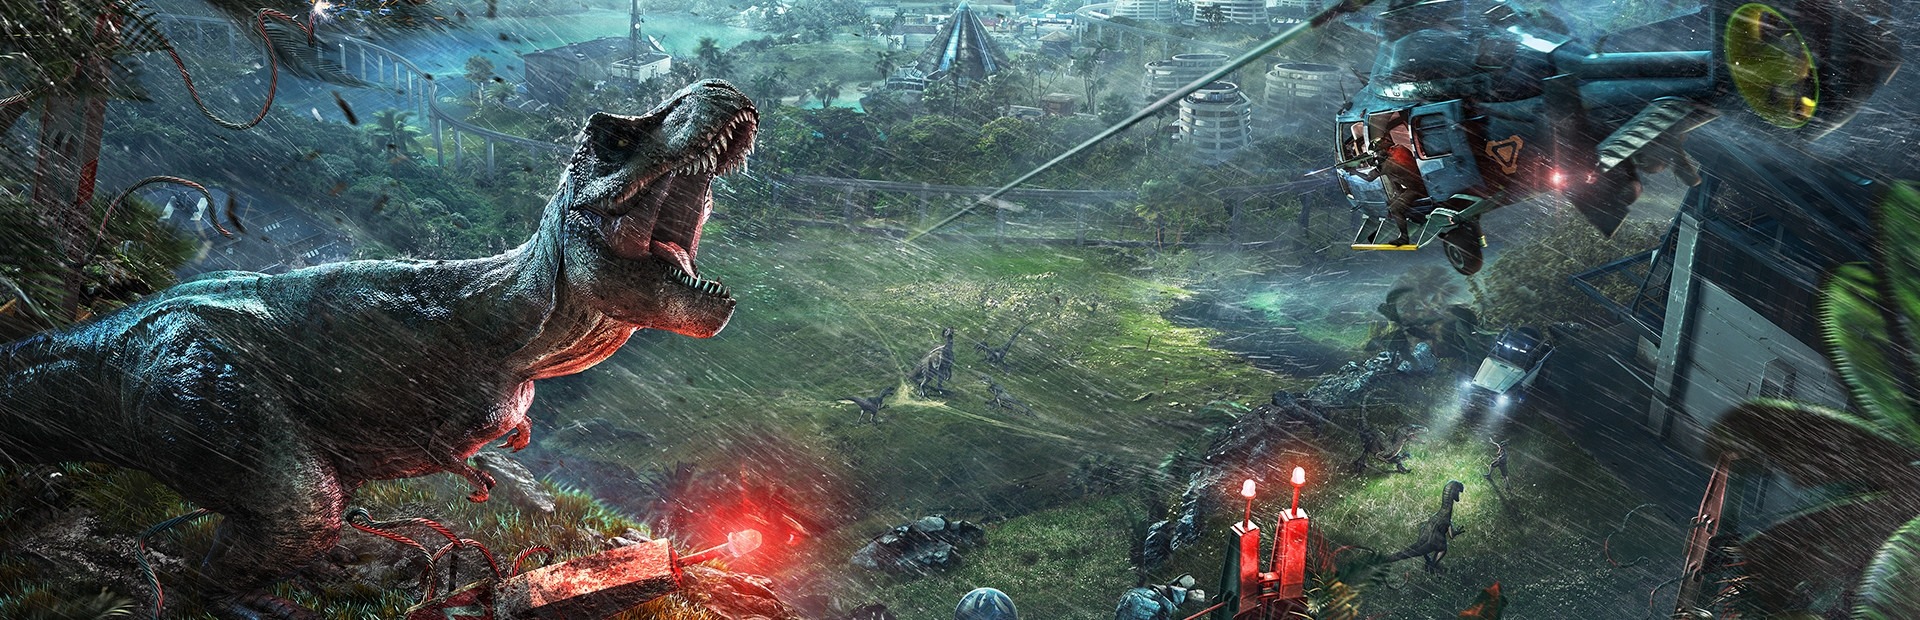 Return to Jurassic Park, análisis: review con experiencia de juego